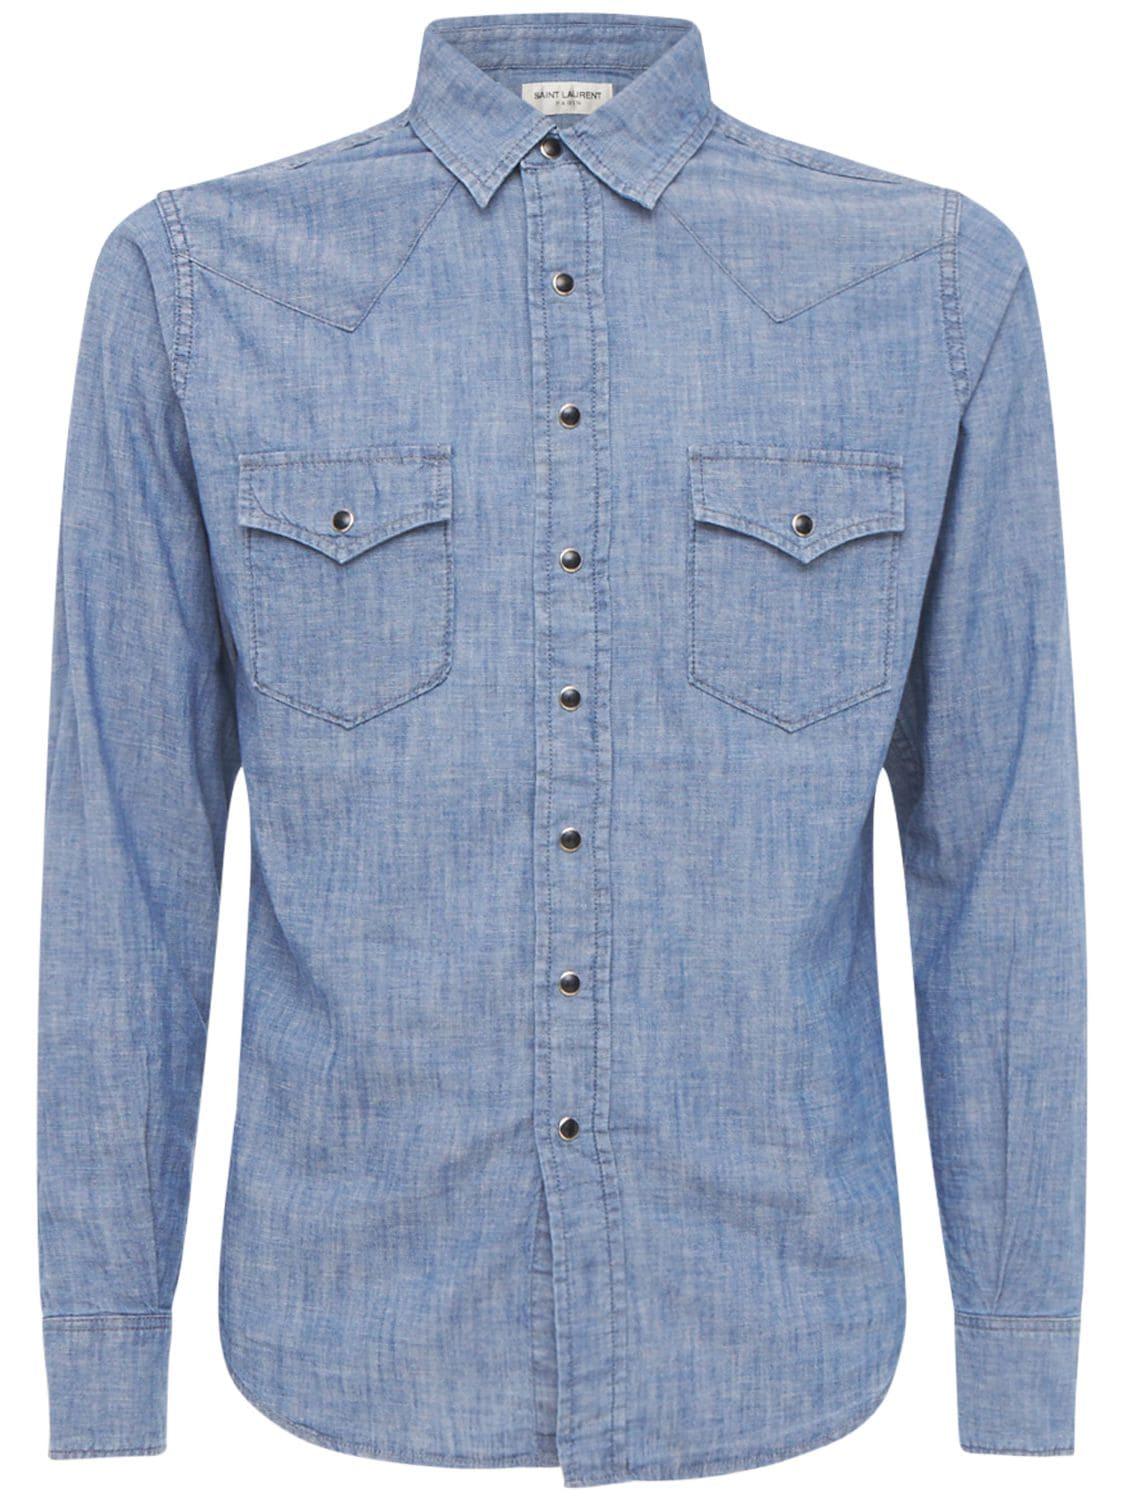 Saint Laurent Classic Western Cotton Linen Denim Shirt in Light Blue (Blue)  for Men - Lyst